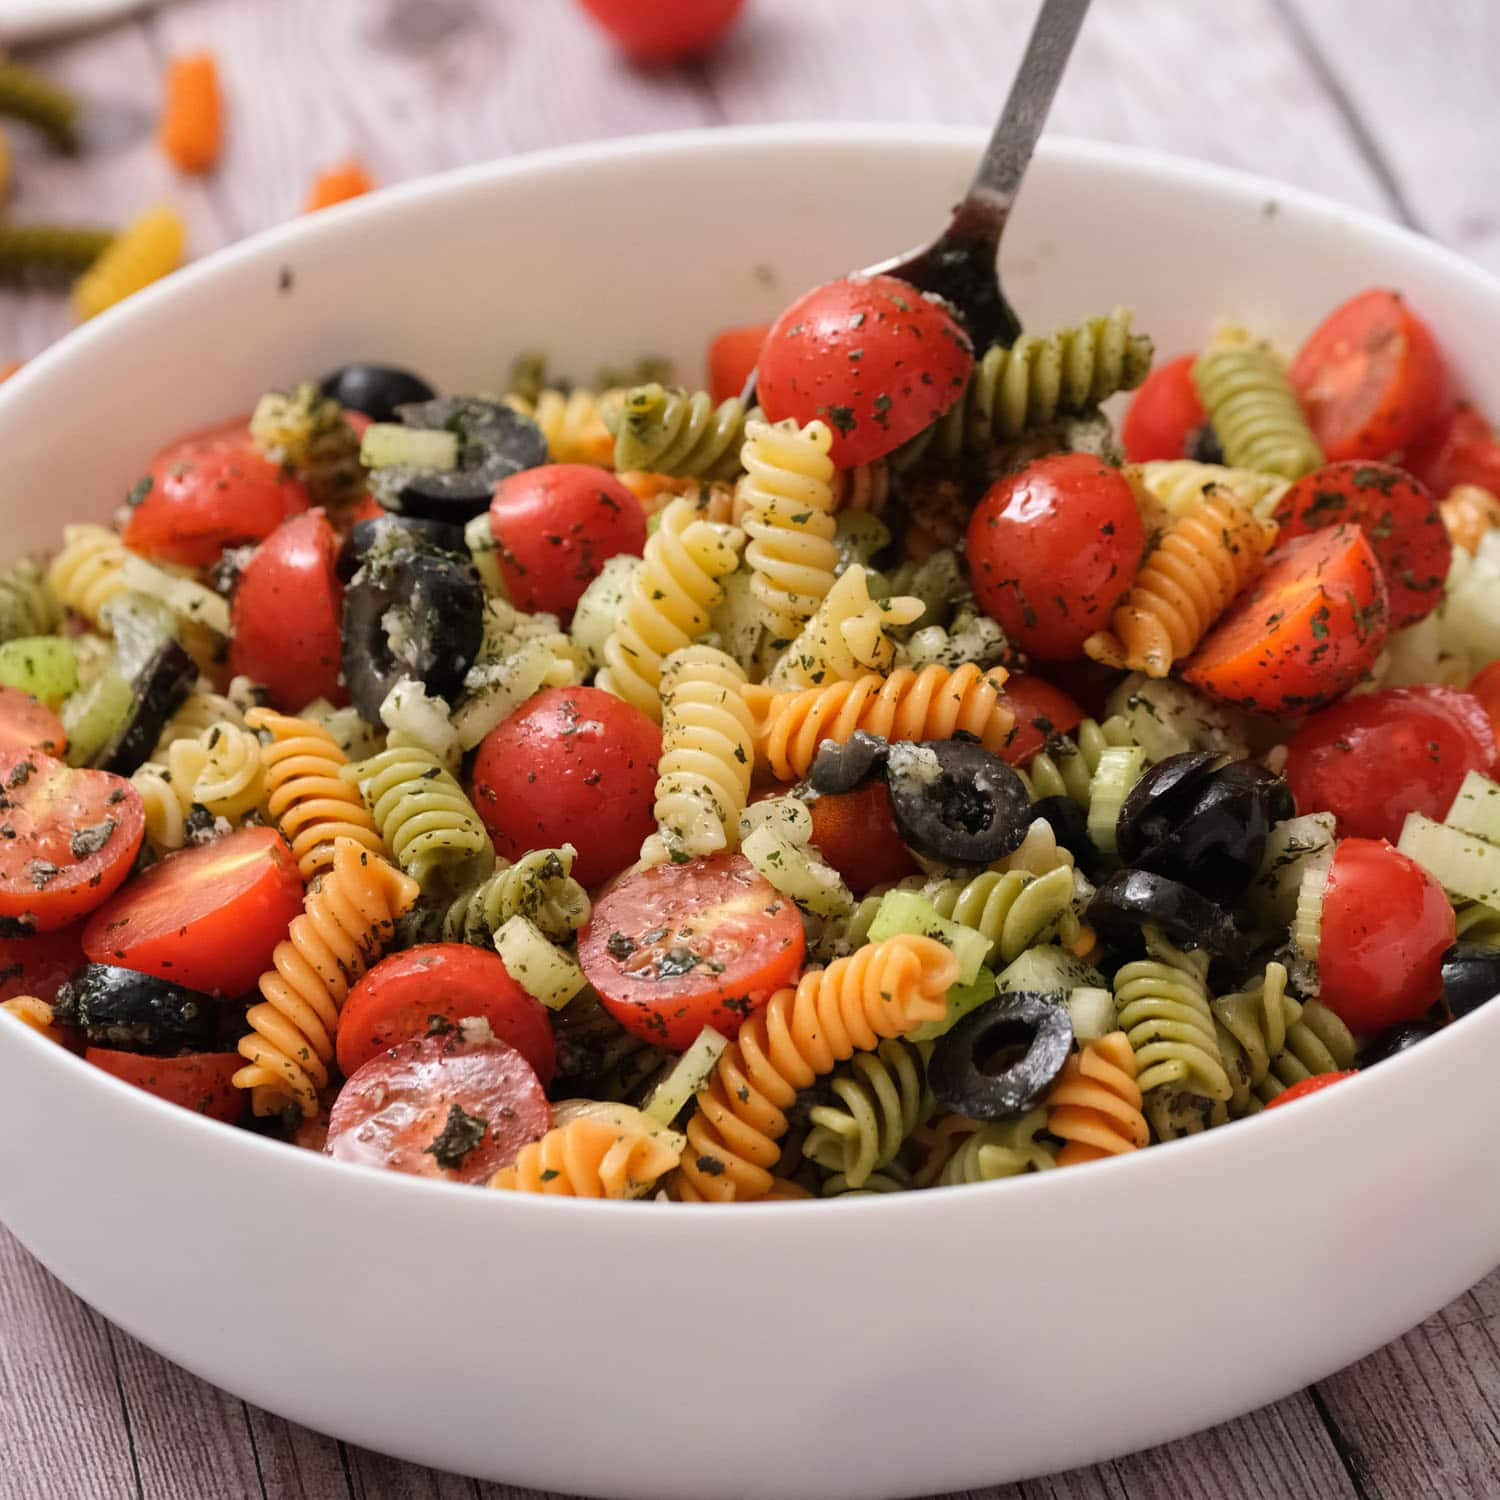 Tri Colored Pasta Salad with Italian Dressing Lovely Tri Color Italian Pasta Salad Easy Recipe with Italian